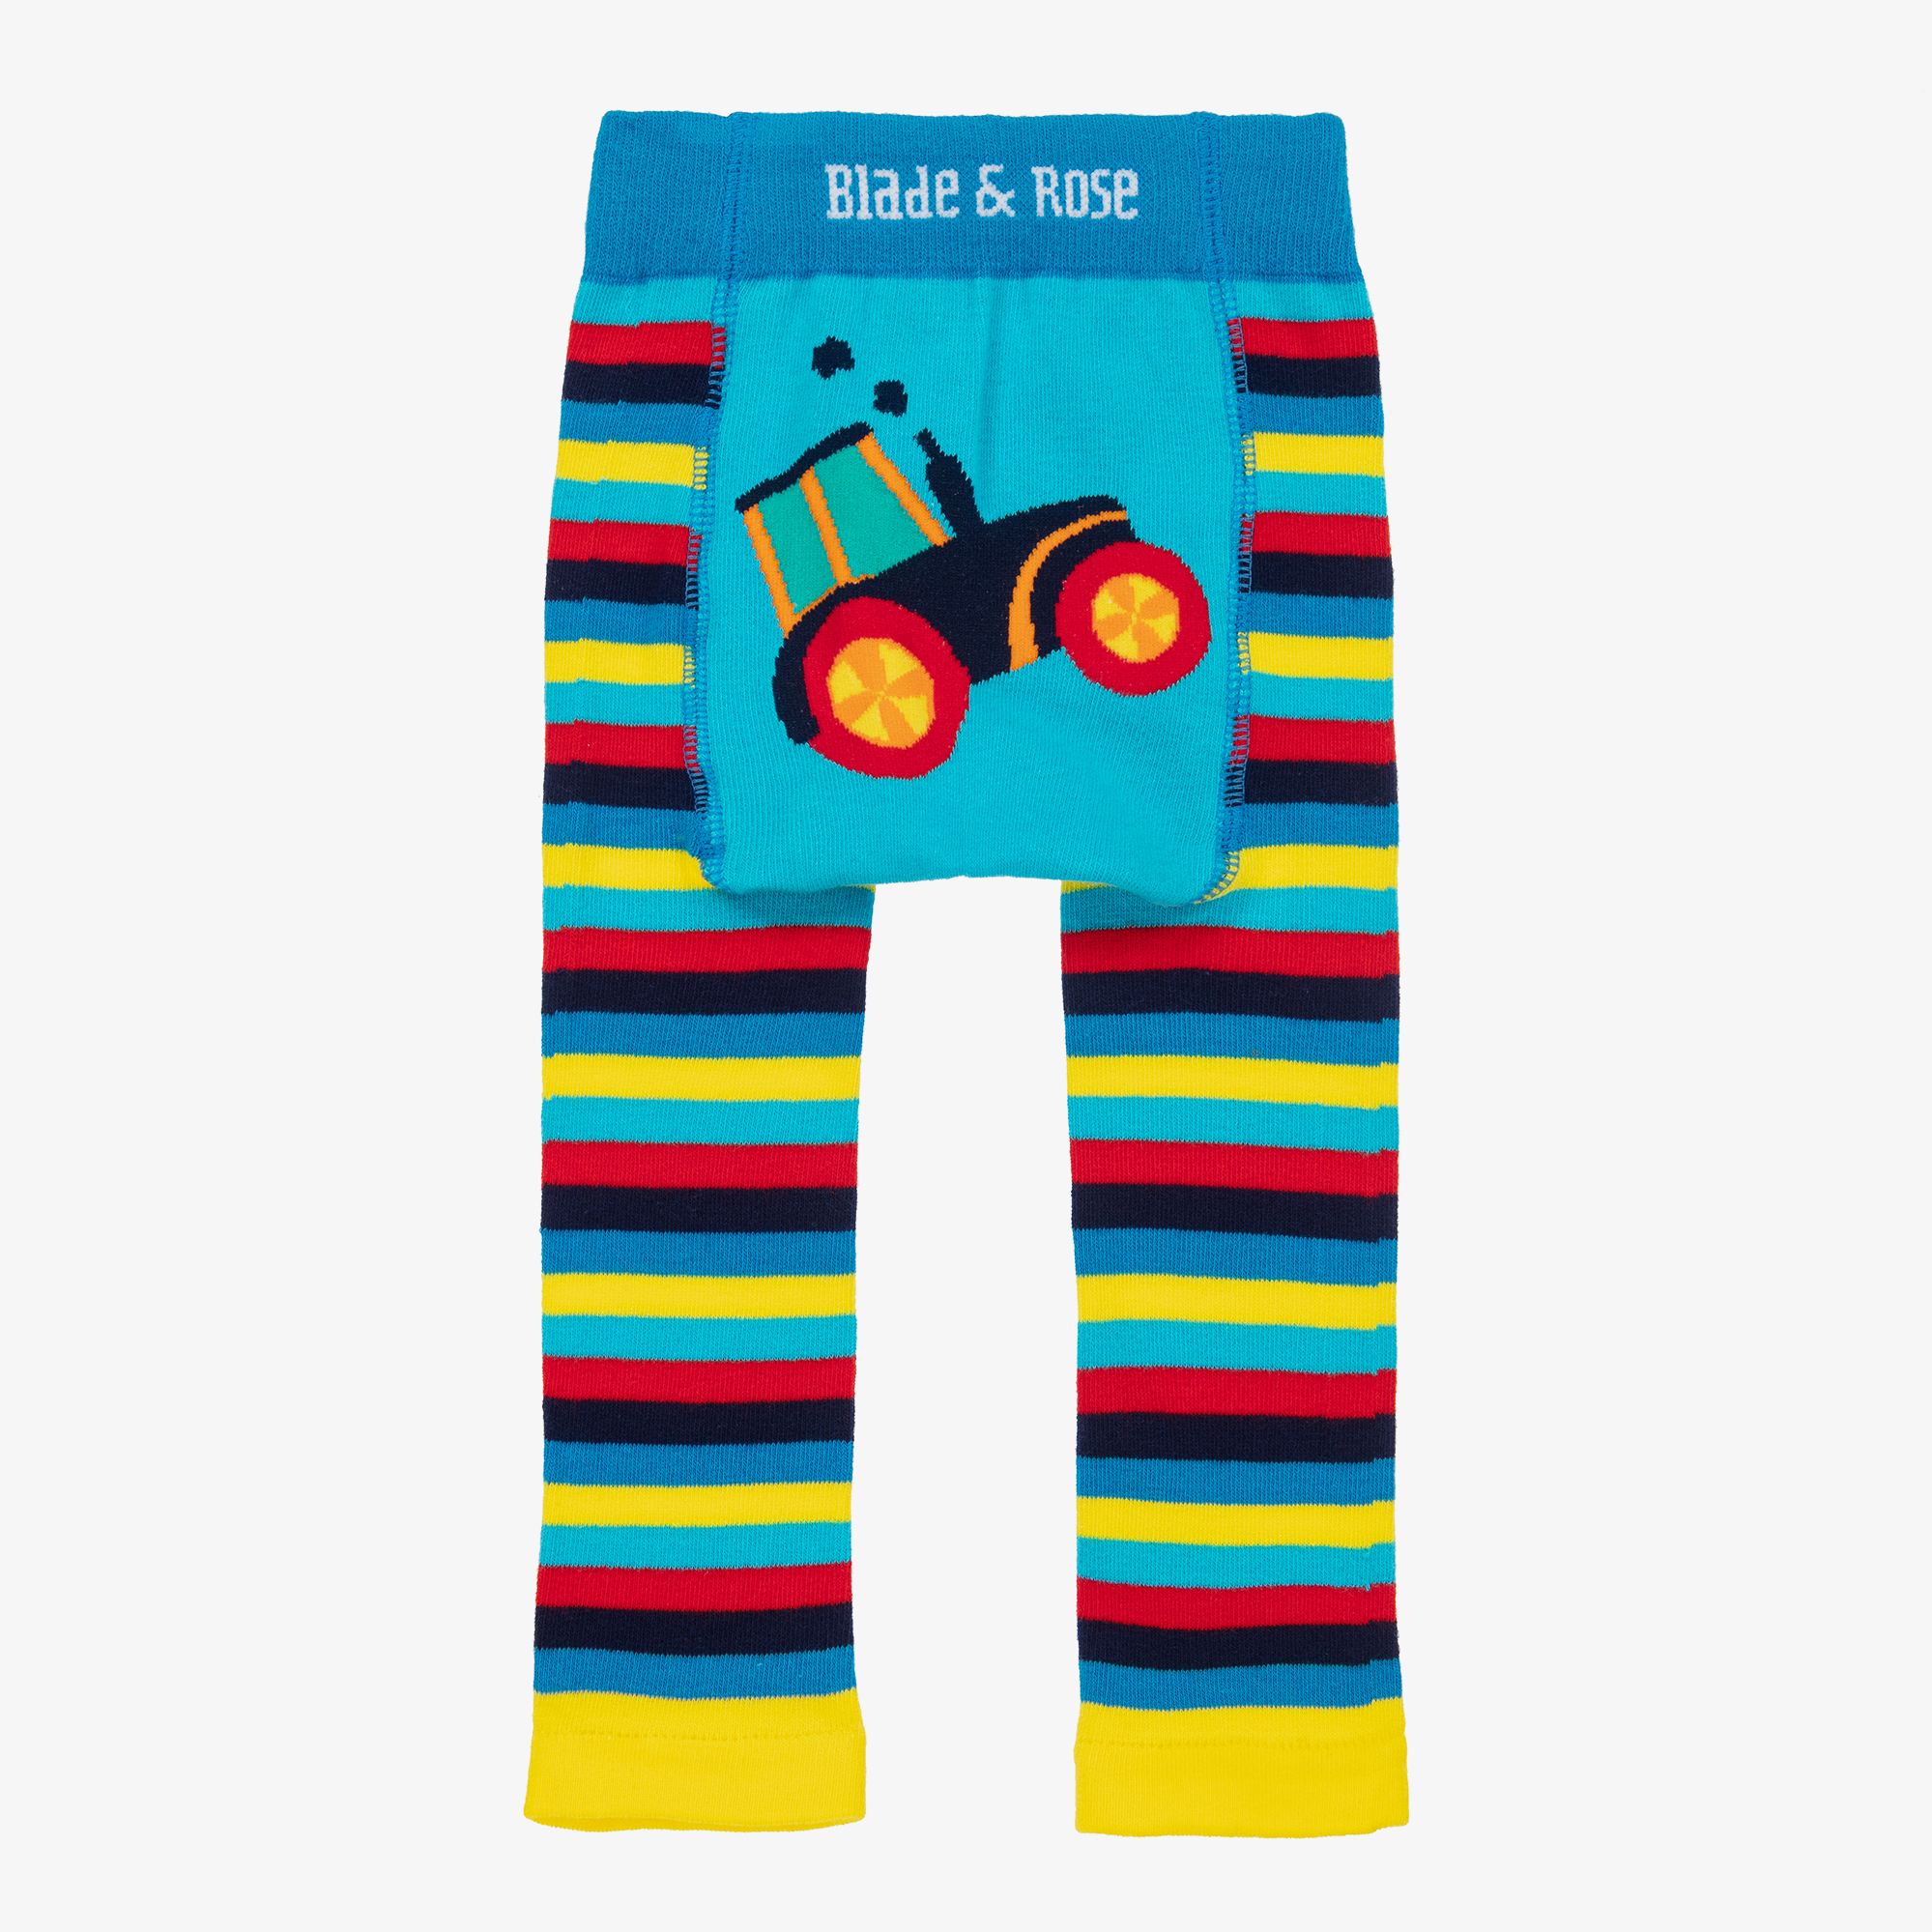 Blade & Rose - Boys Blue Farmyard Tractor Leggings